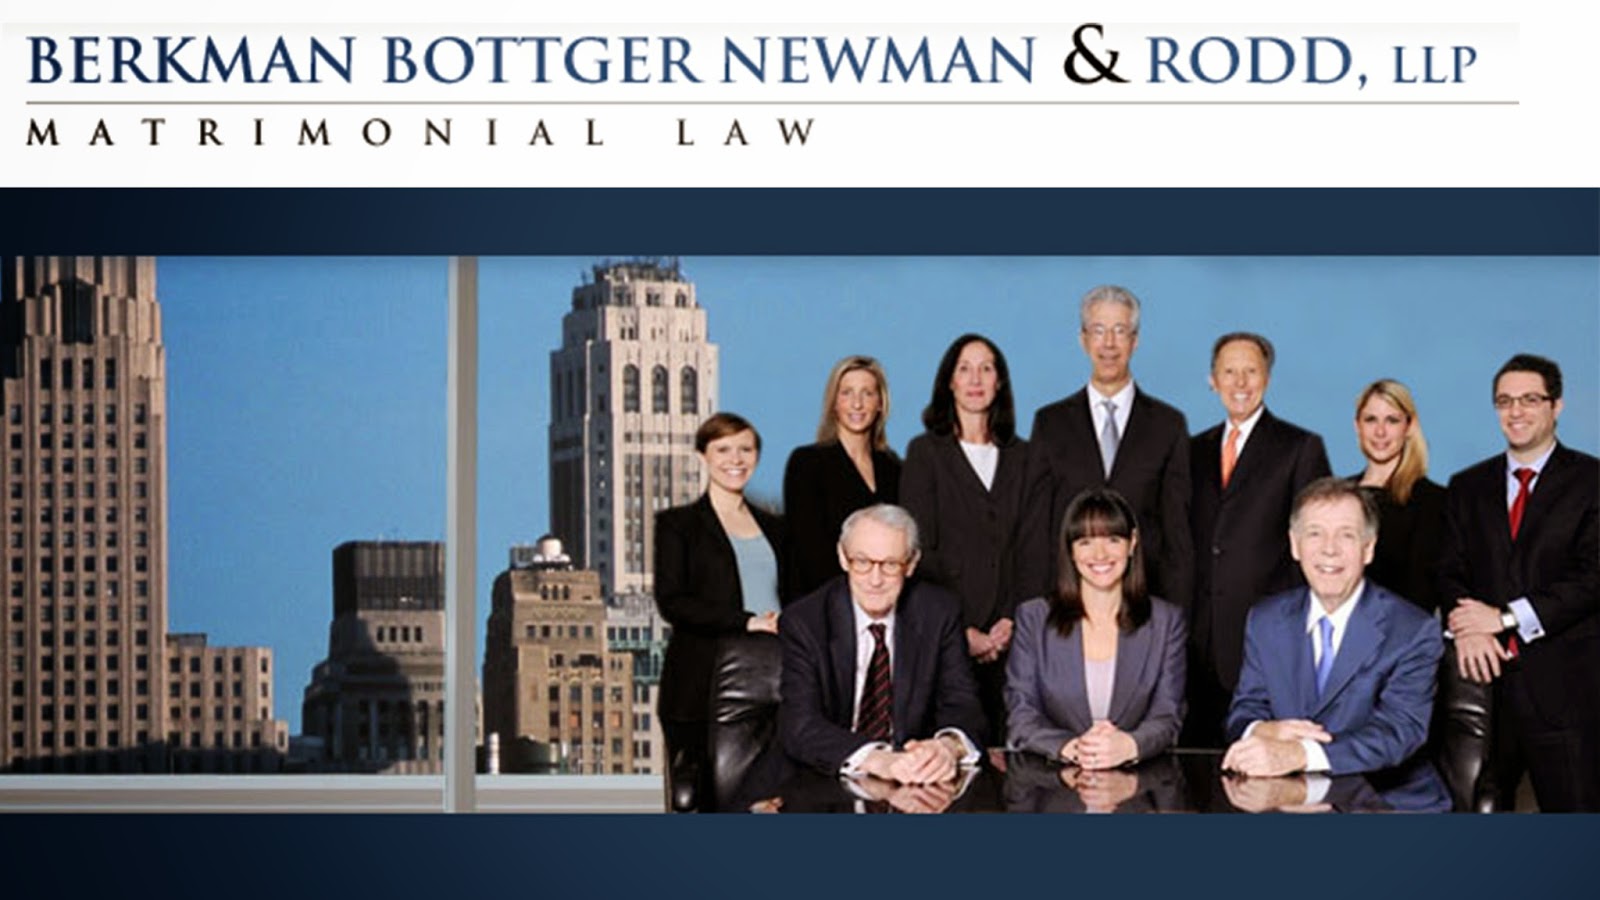 Photo of Berkman Bottger Newman & Rodd, LLP in New York City, New York, United States - 4 Picture of Point of interest, Establishment, Lawyer